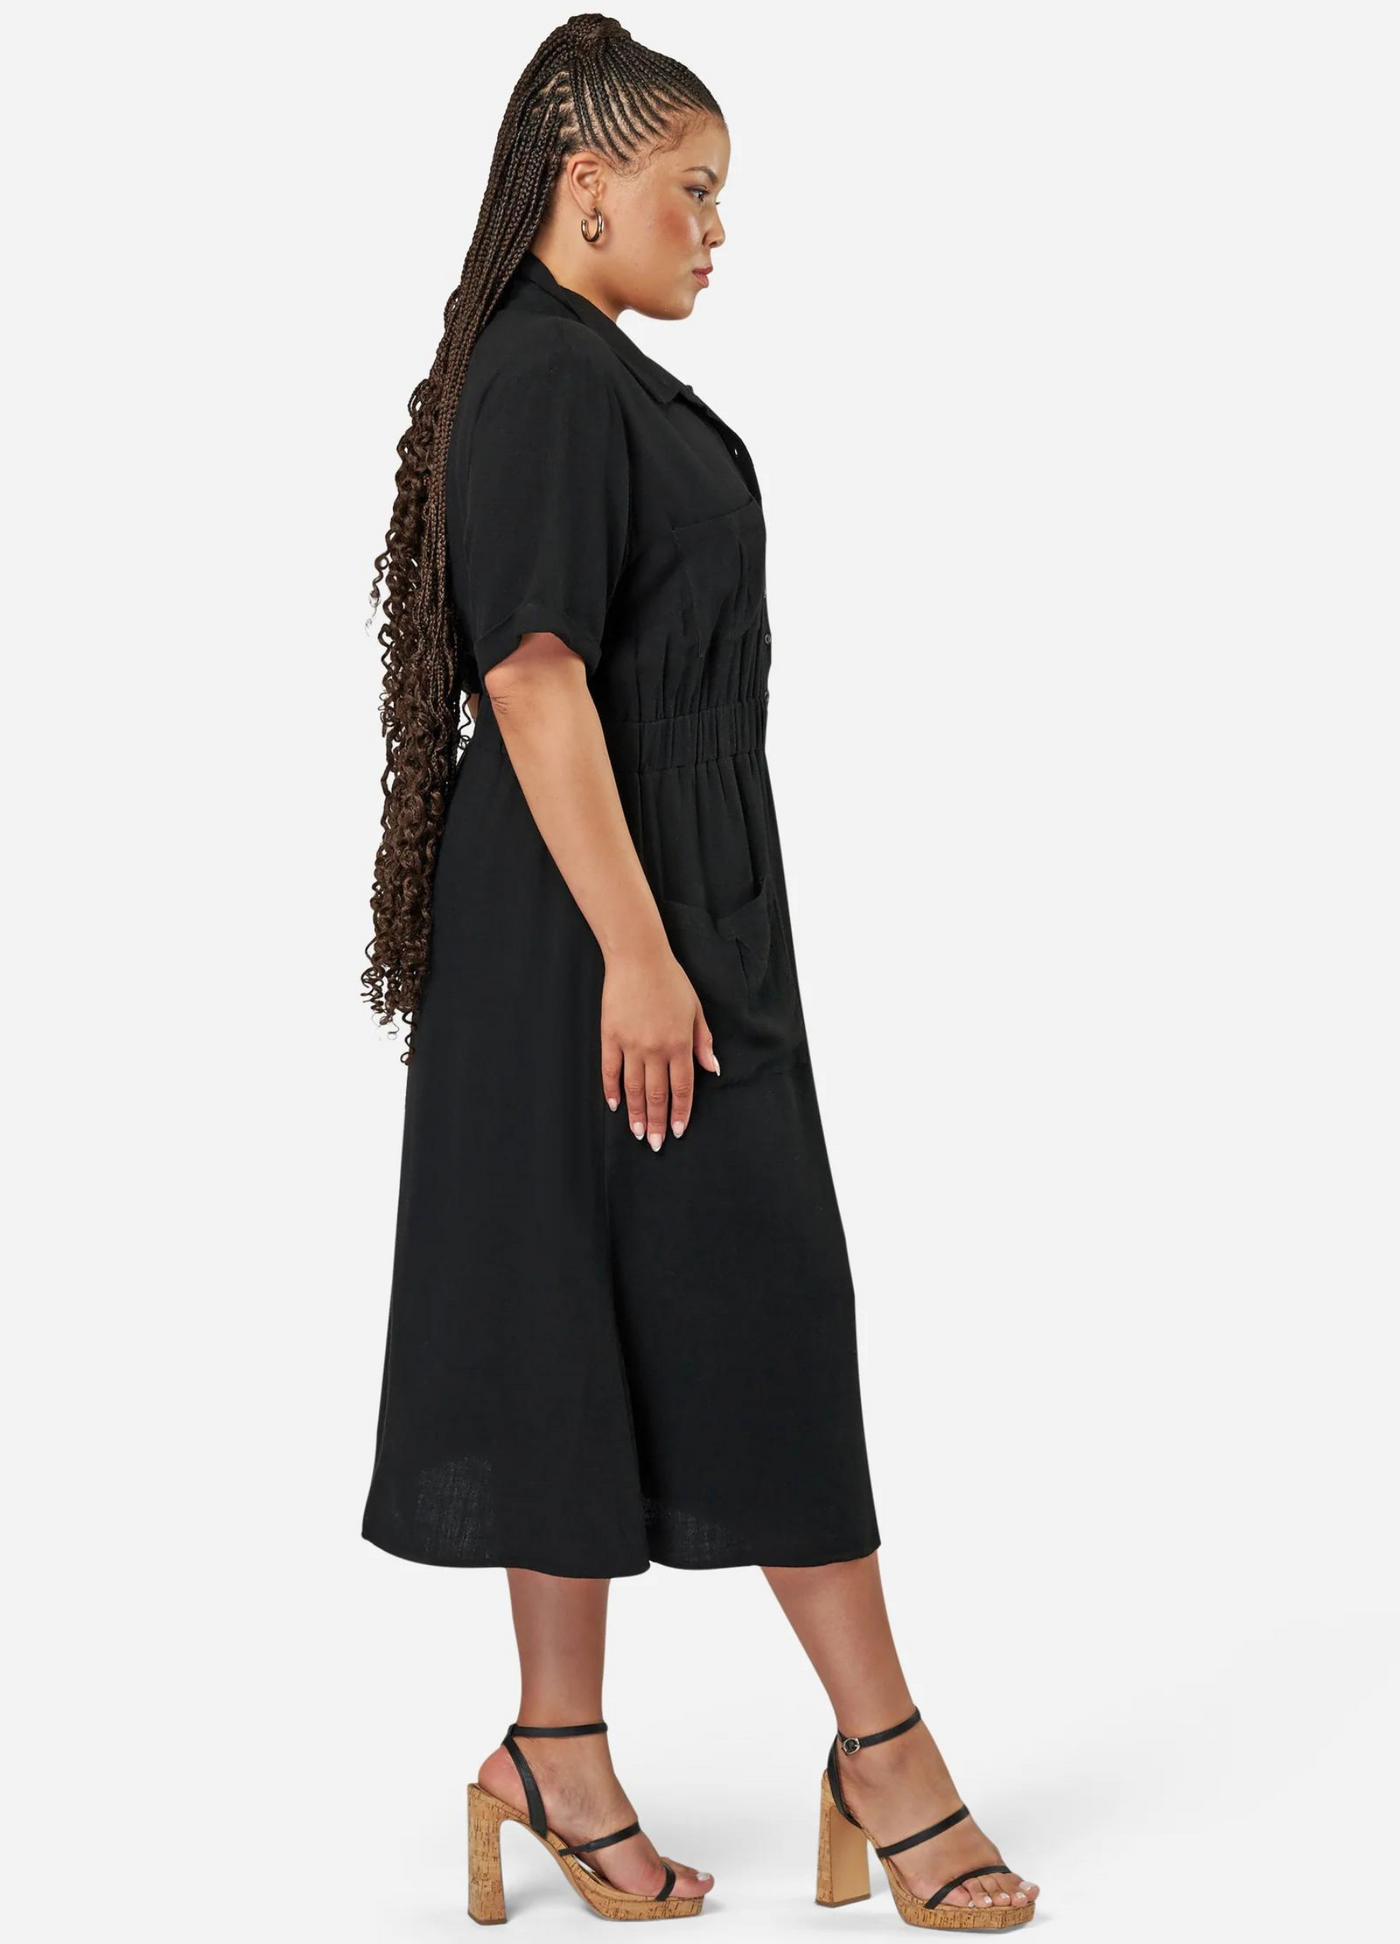 Curve model wearing a black shirt dress